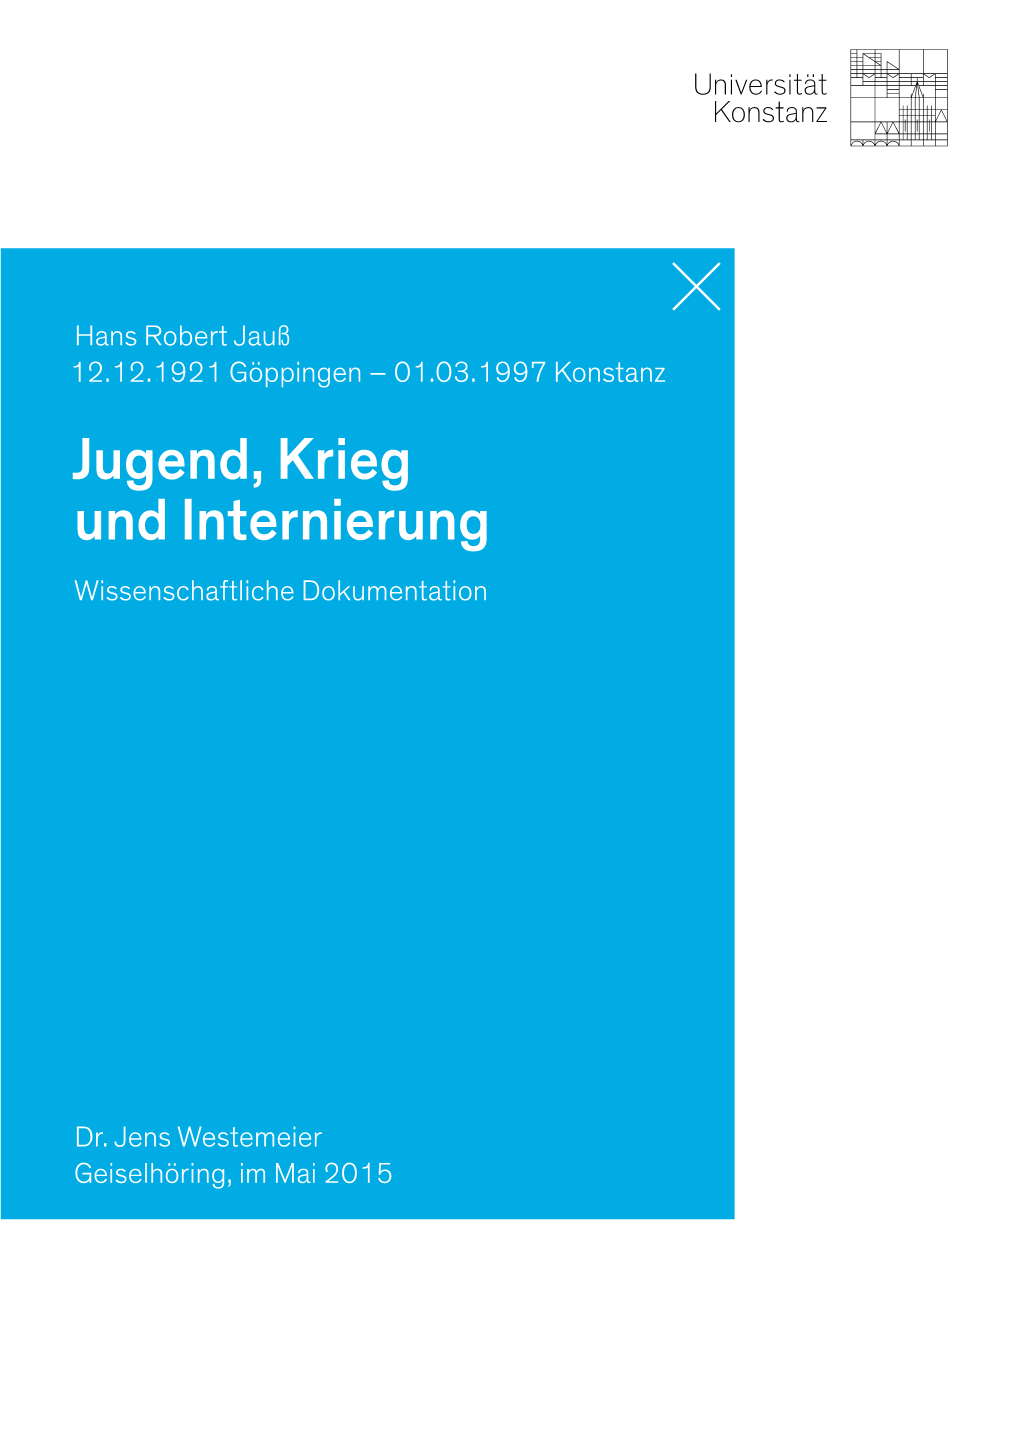 Westemeier Arbeit Hans Robert Jauß Uni Konstanz 20.05.2015